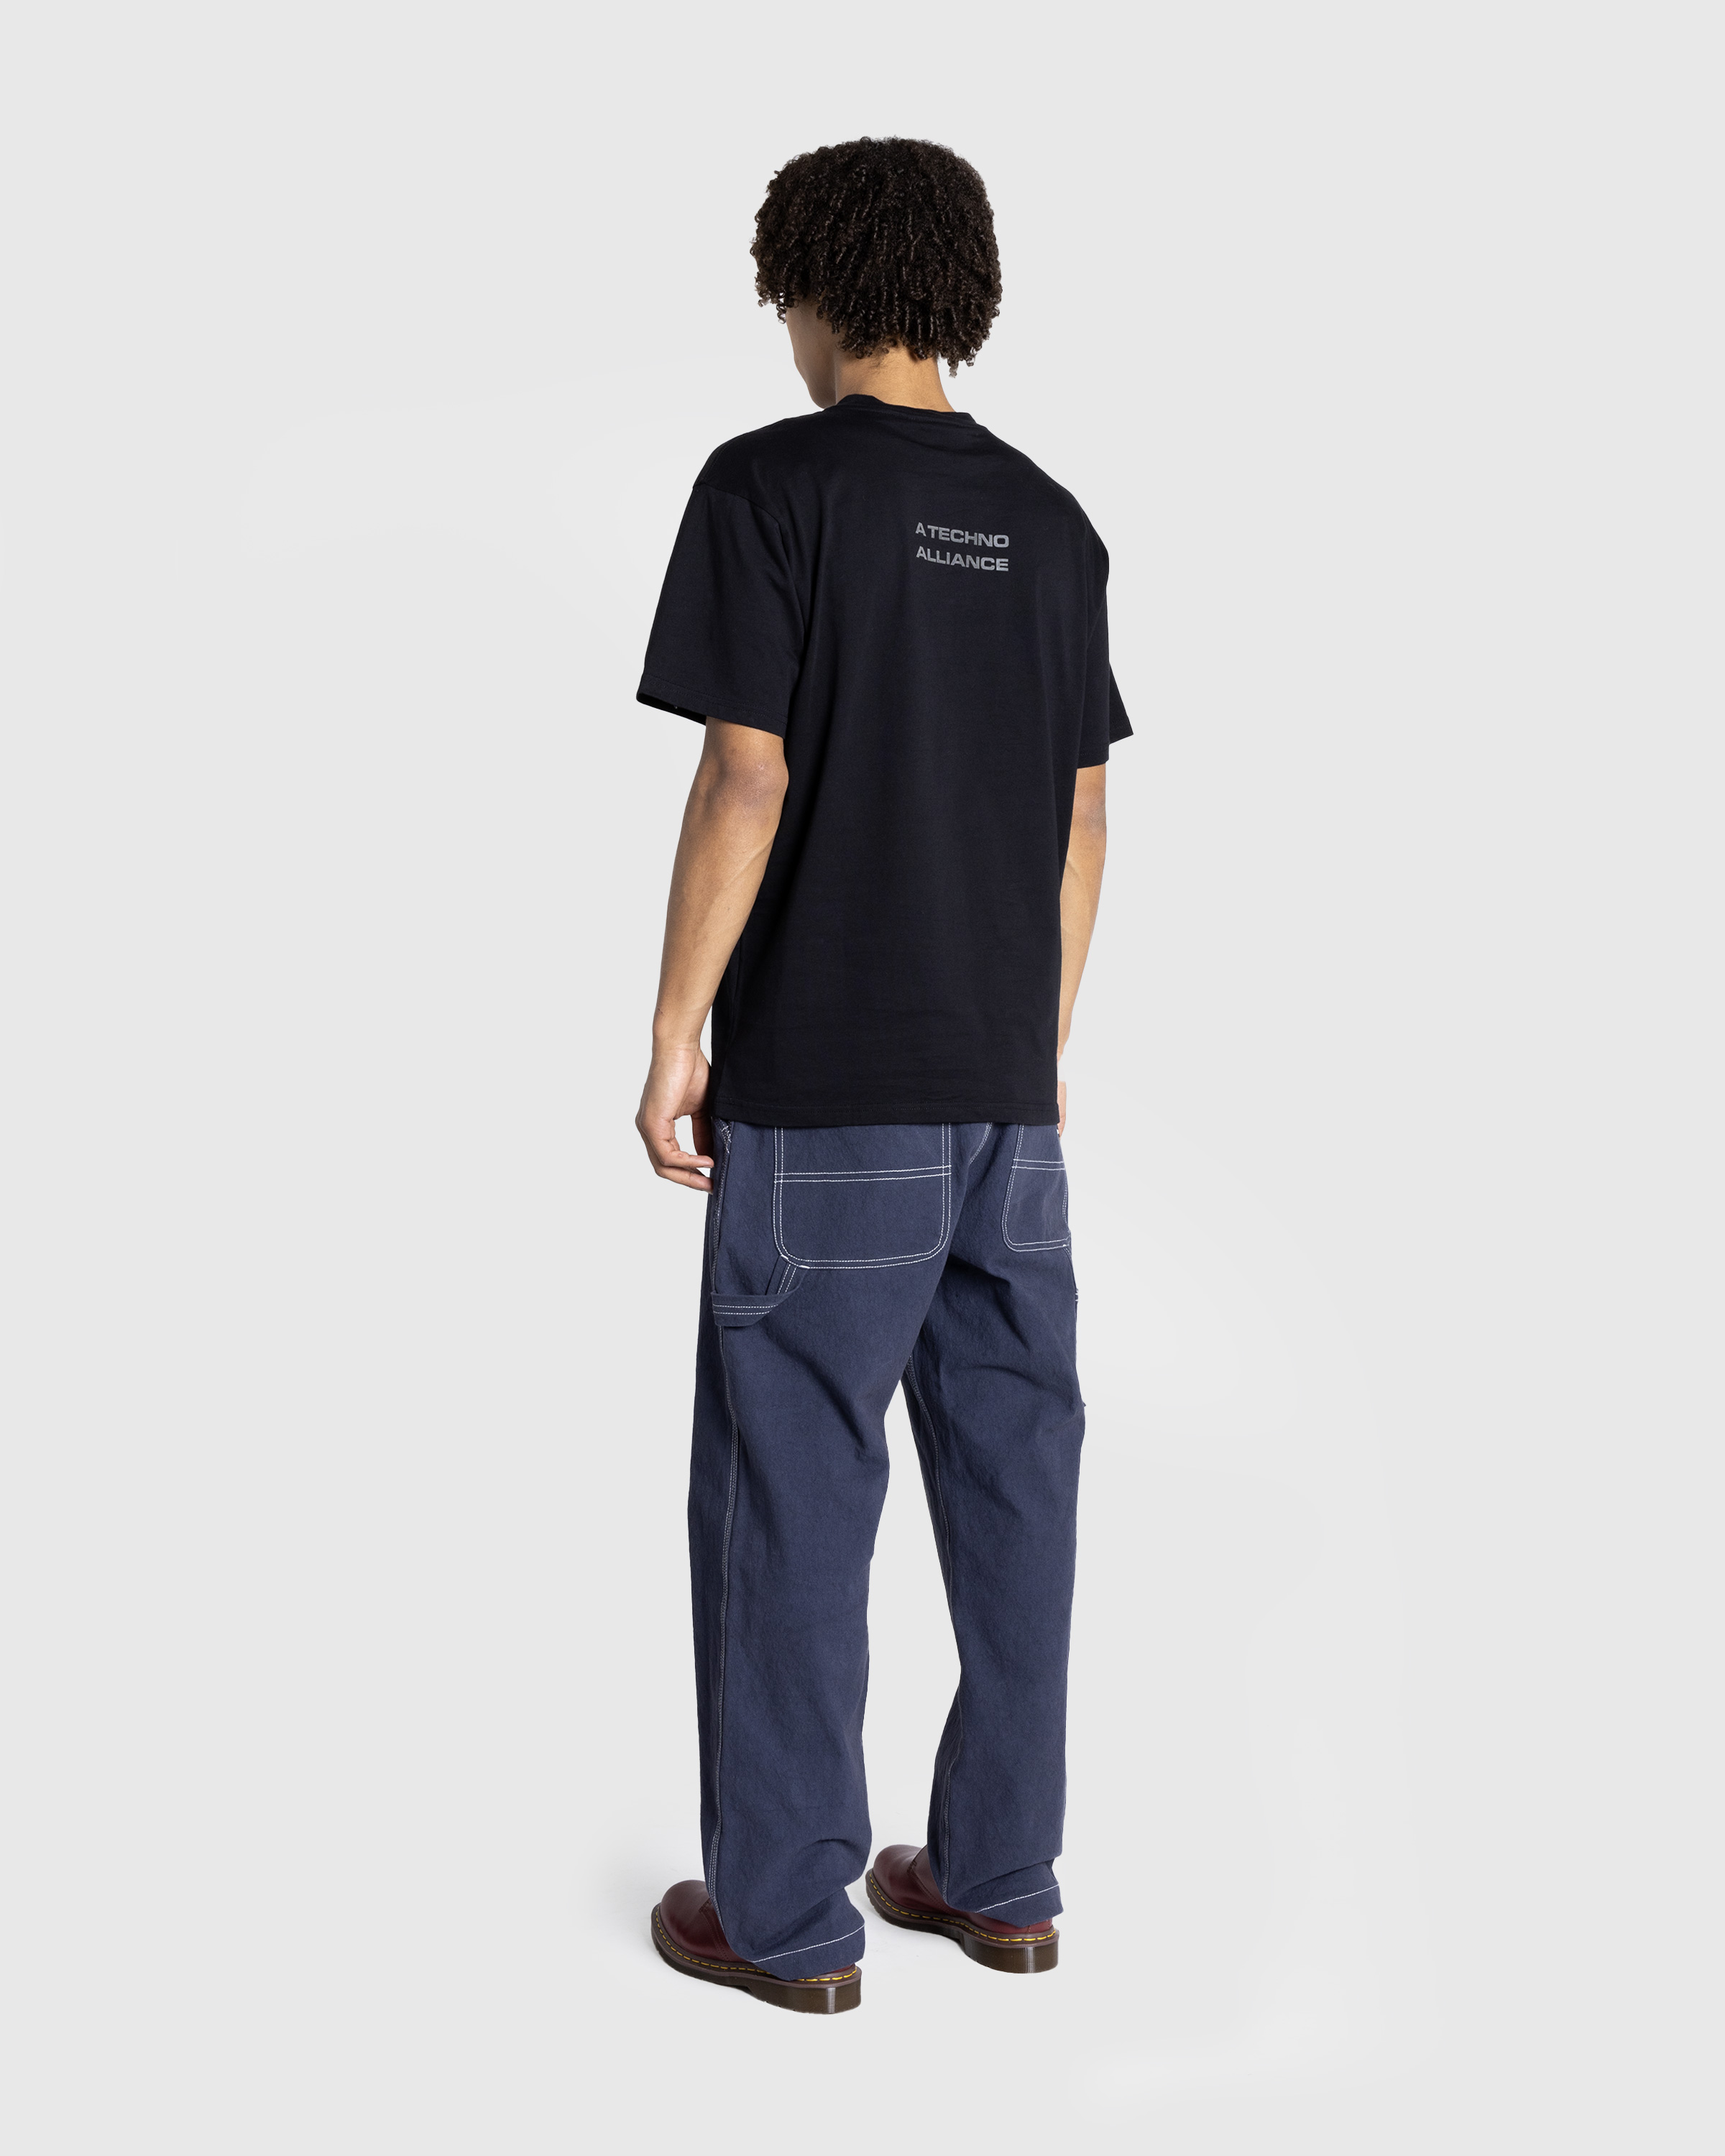 Carhartt WIP x Tresor – Techno Alliance S/S T-Shirt Black/Dark Grey Reflective - Tops - Black - Image 4